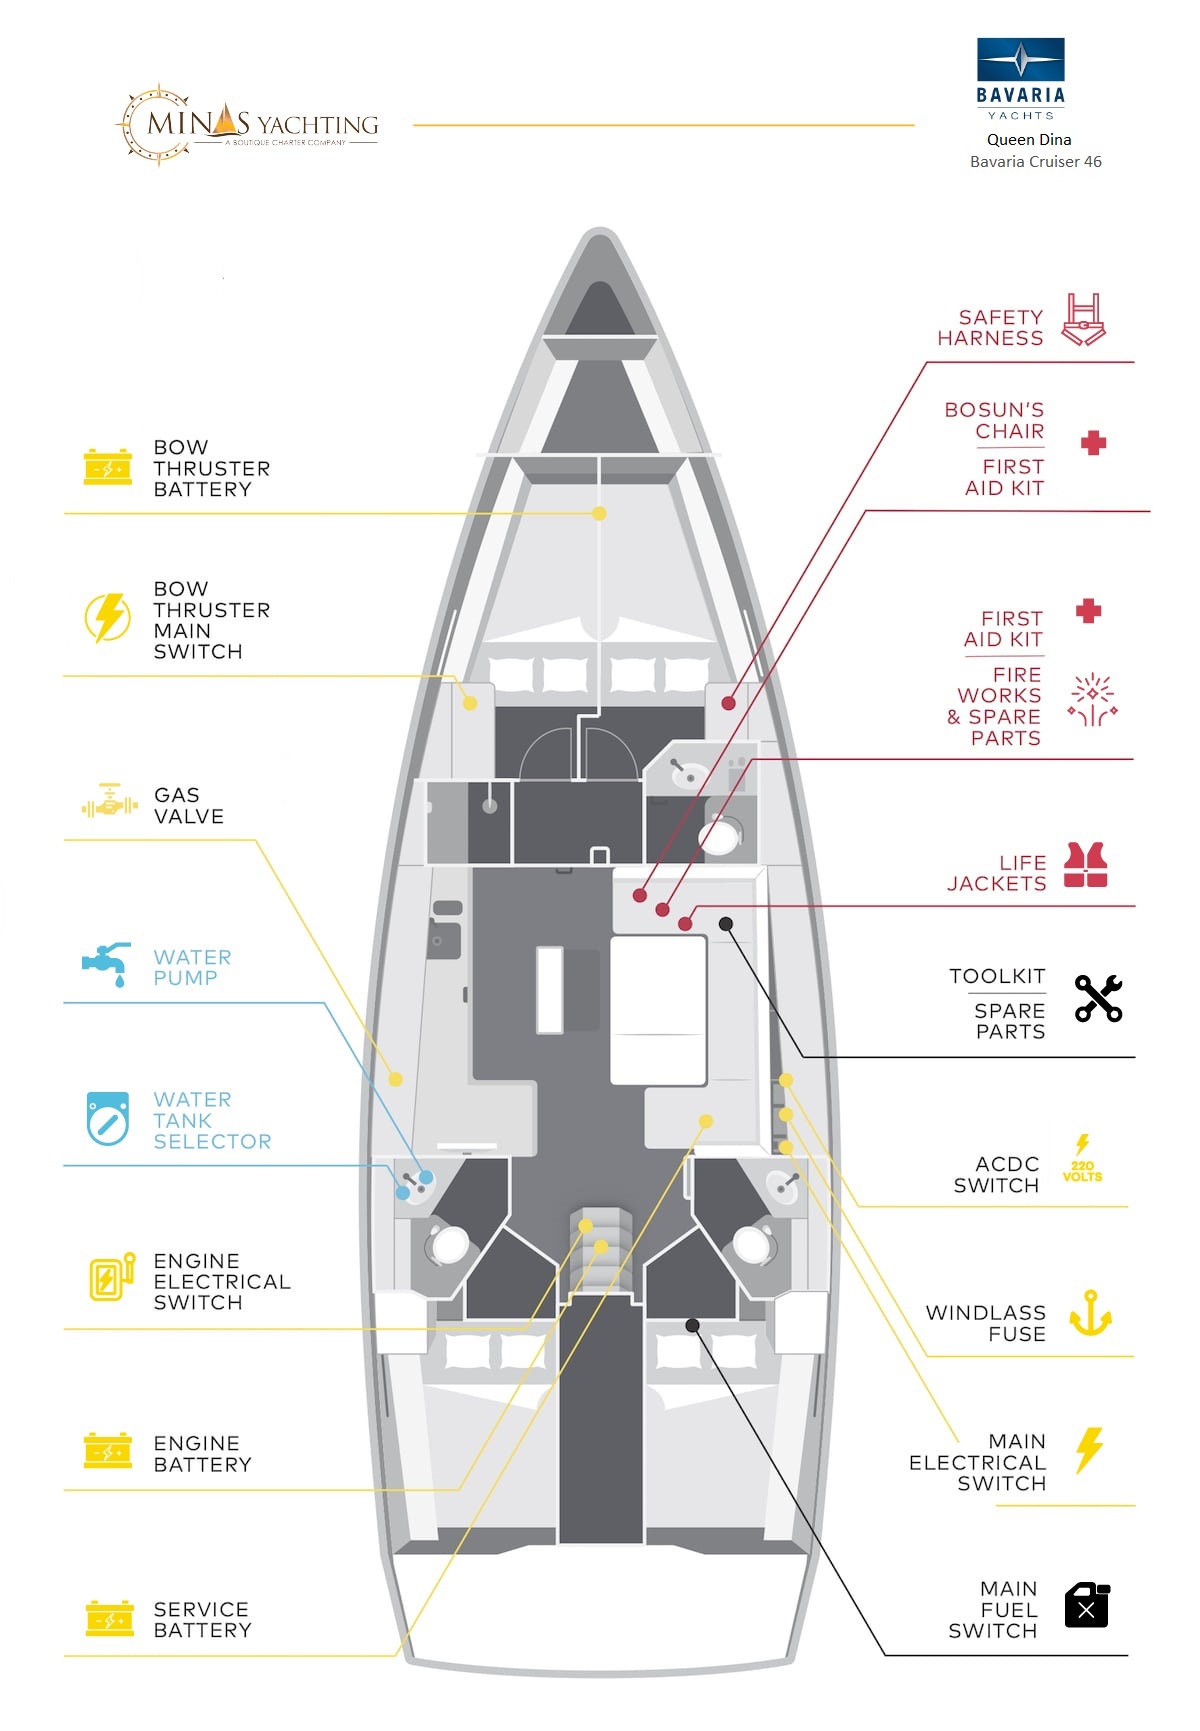 BAVARIA CRUISER 46 INTERIOR - minas yachting - hire a yacht in corfu